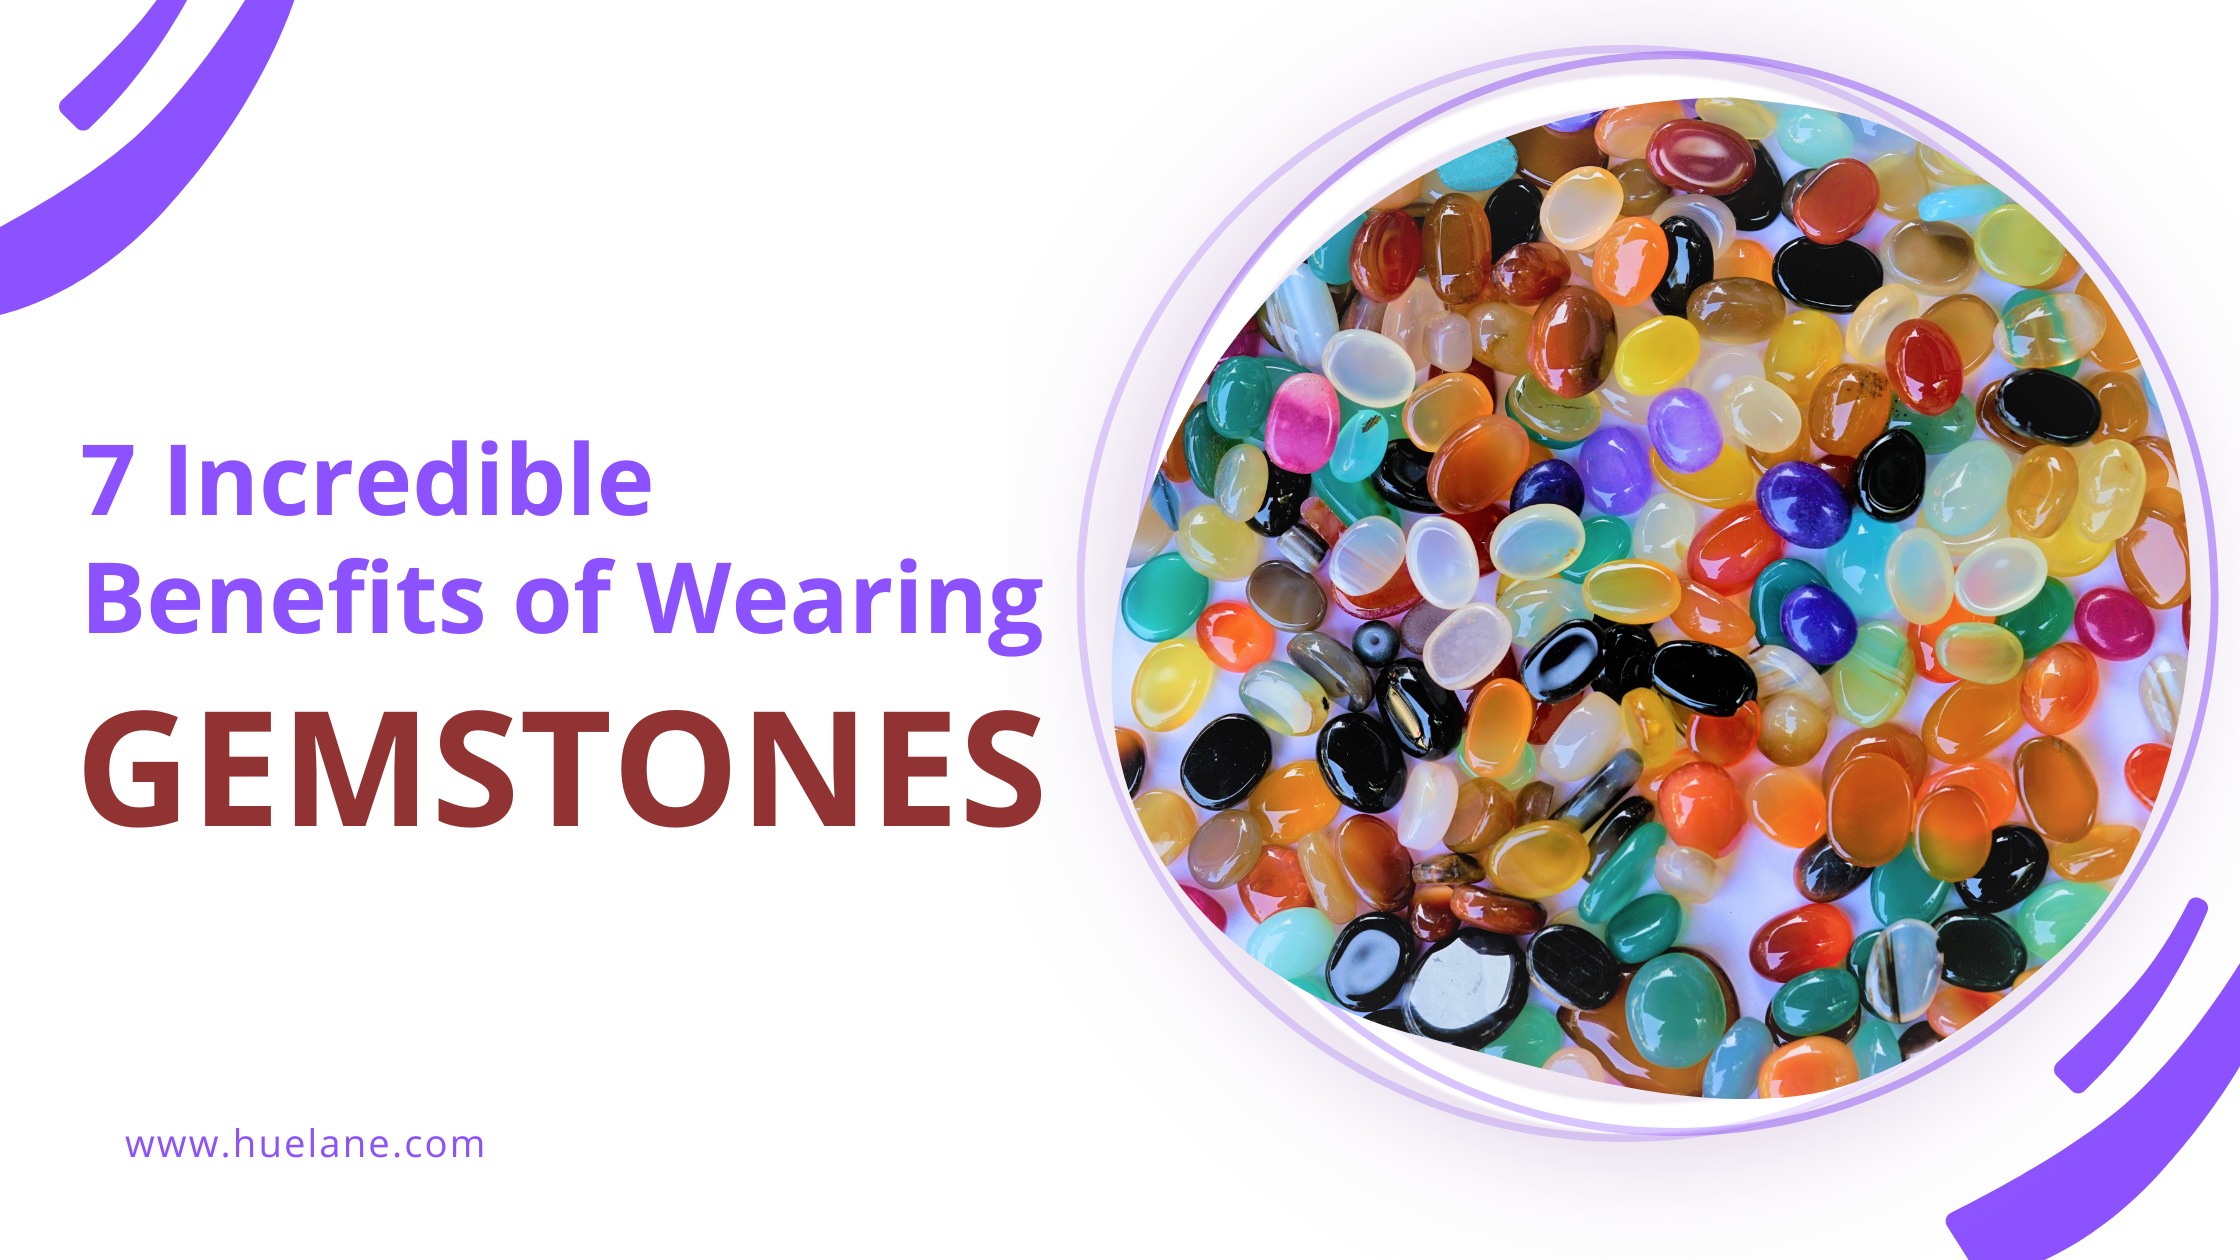 7 Incredible Benefits of Wearing Gemstones